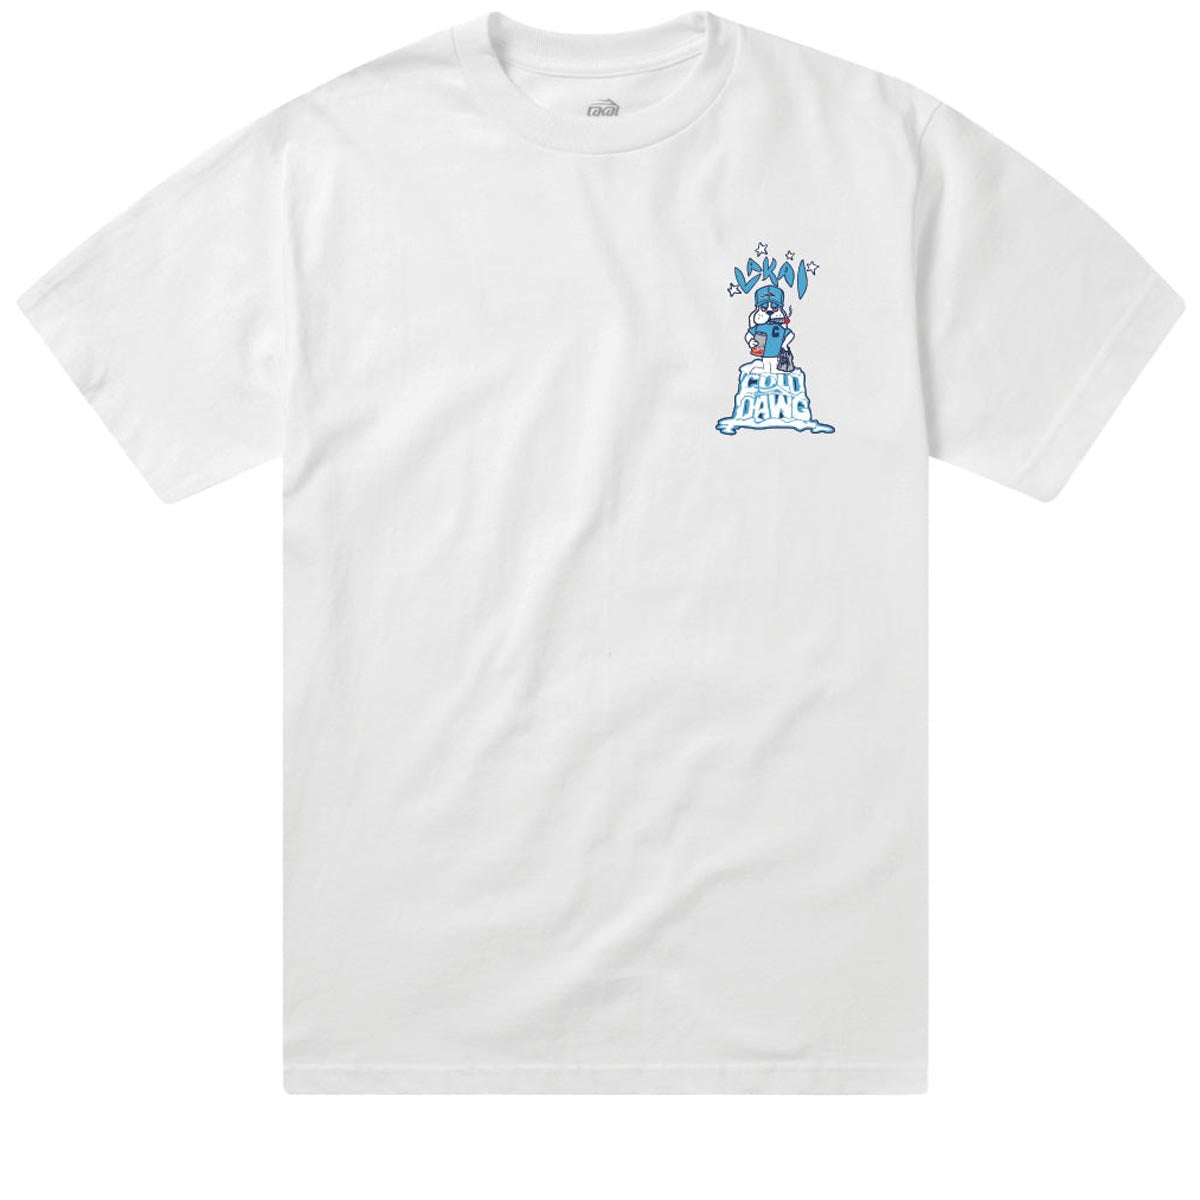 Lakai Cold Dawg T-Shirt - White/Blue image 1